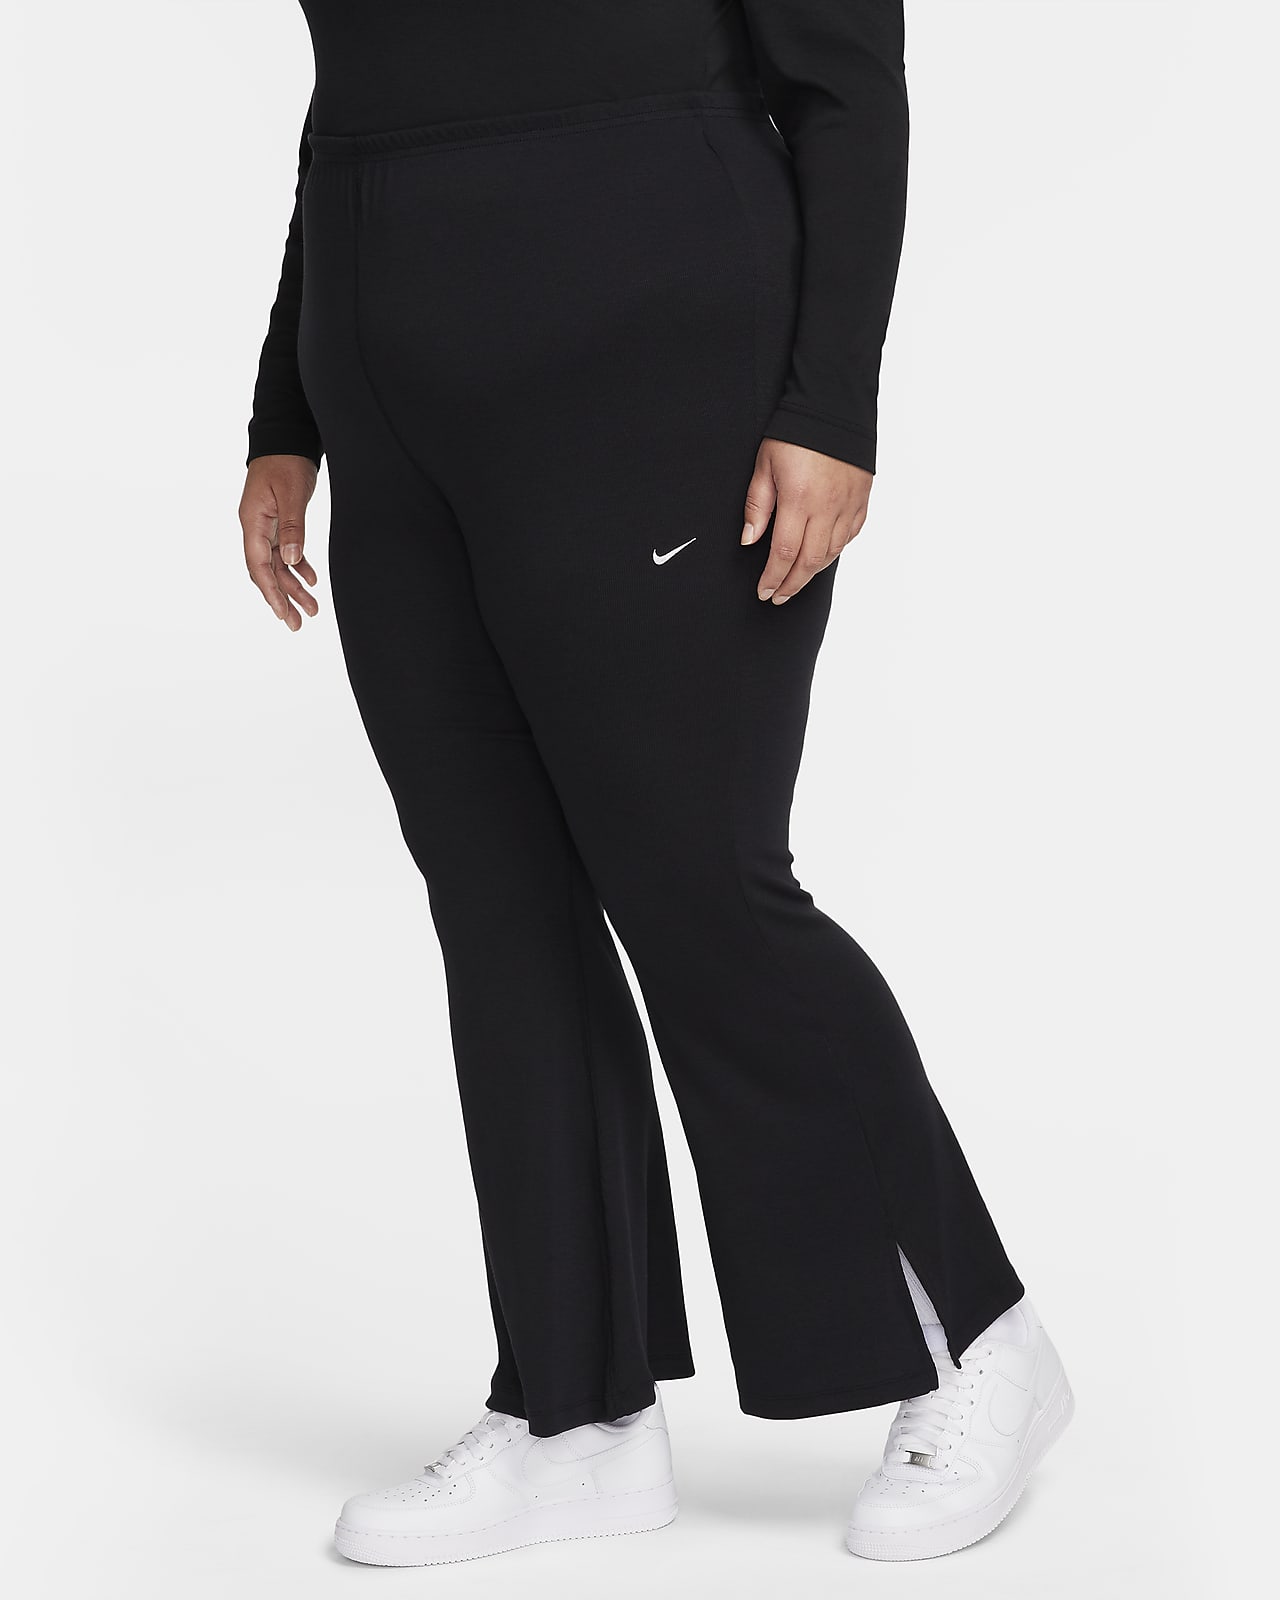 Women's Plus Size Pants & Tights. Nike.com  Womens training, Plus size, Womens  tights